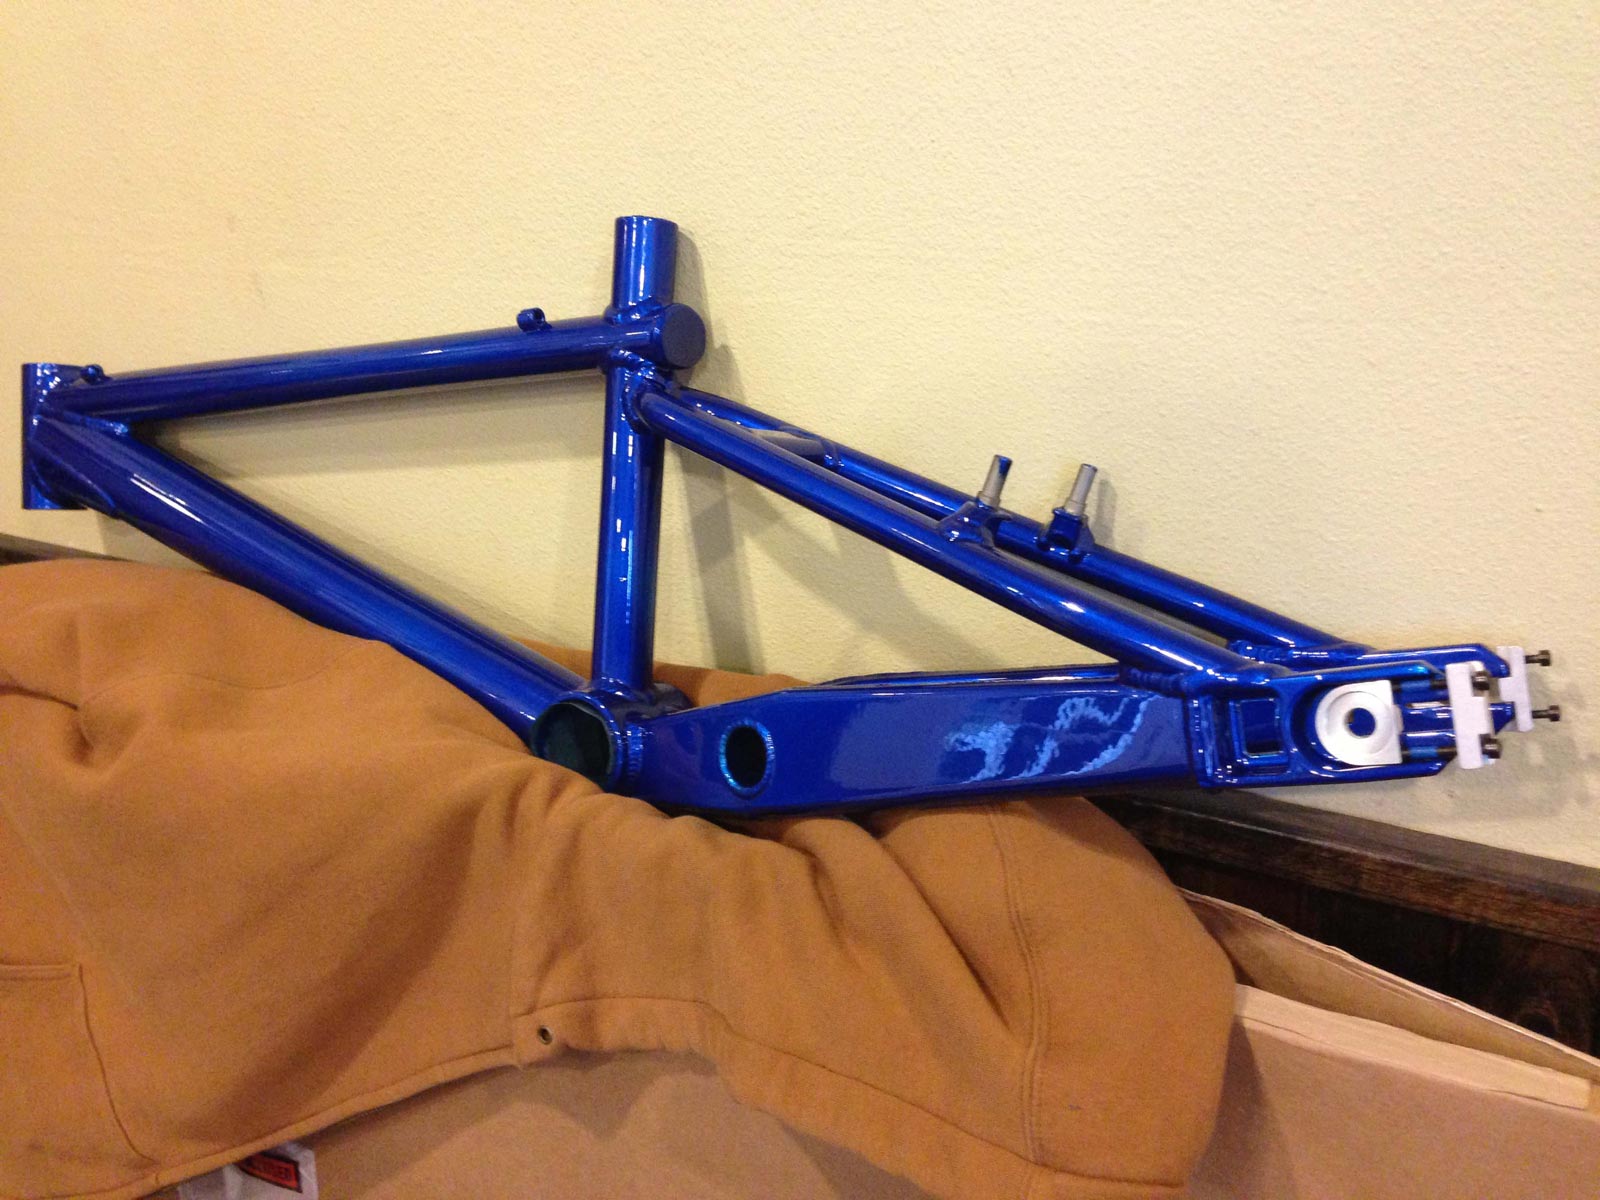 Powder coated bicycle frame.